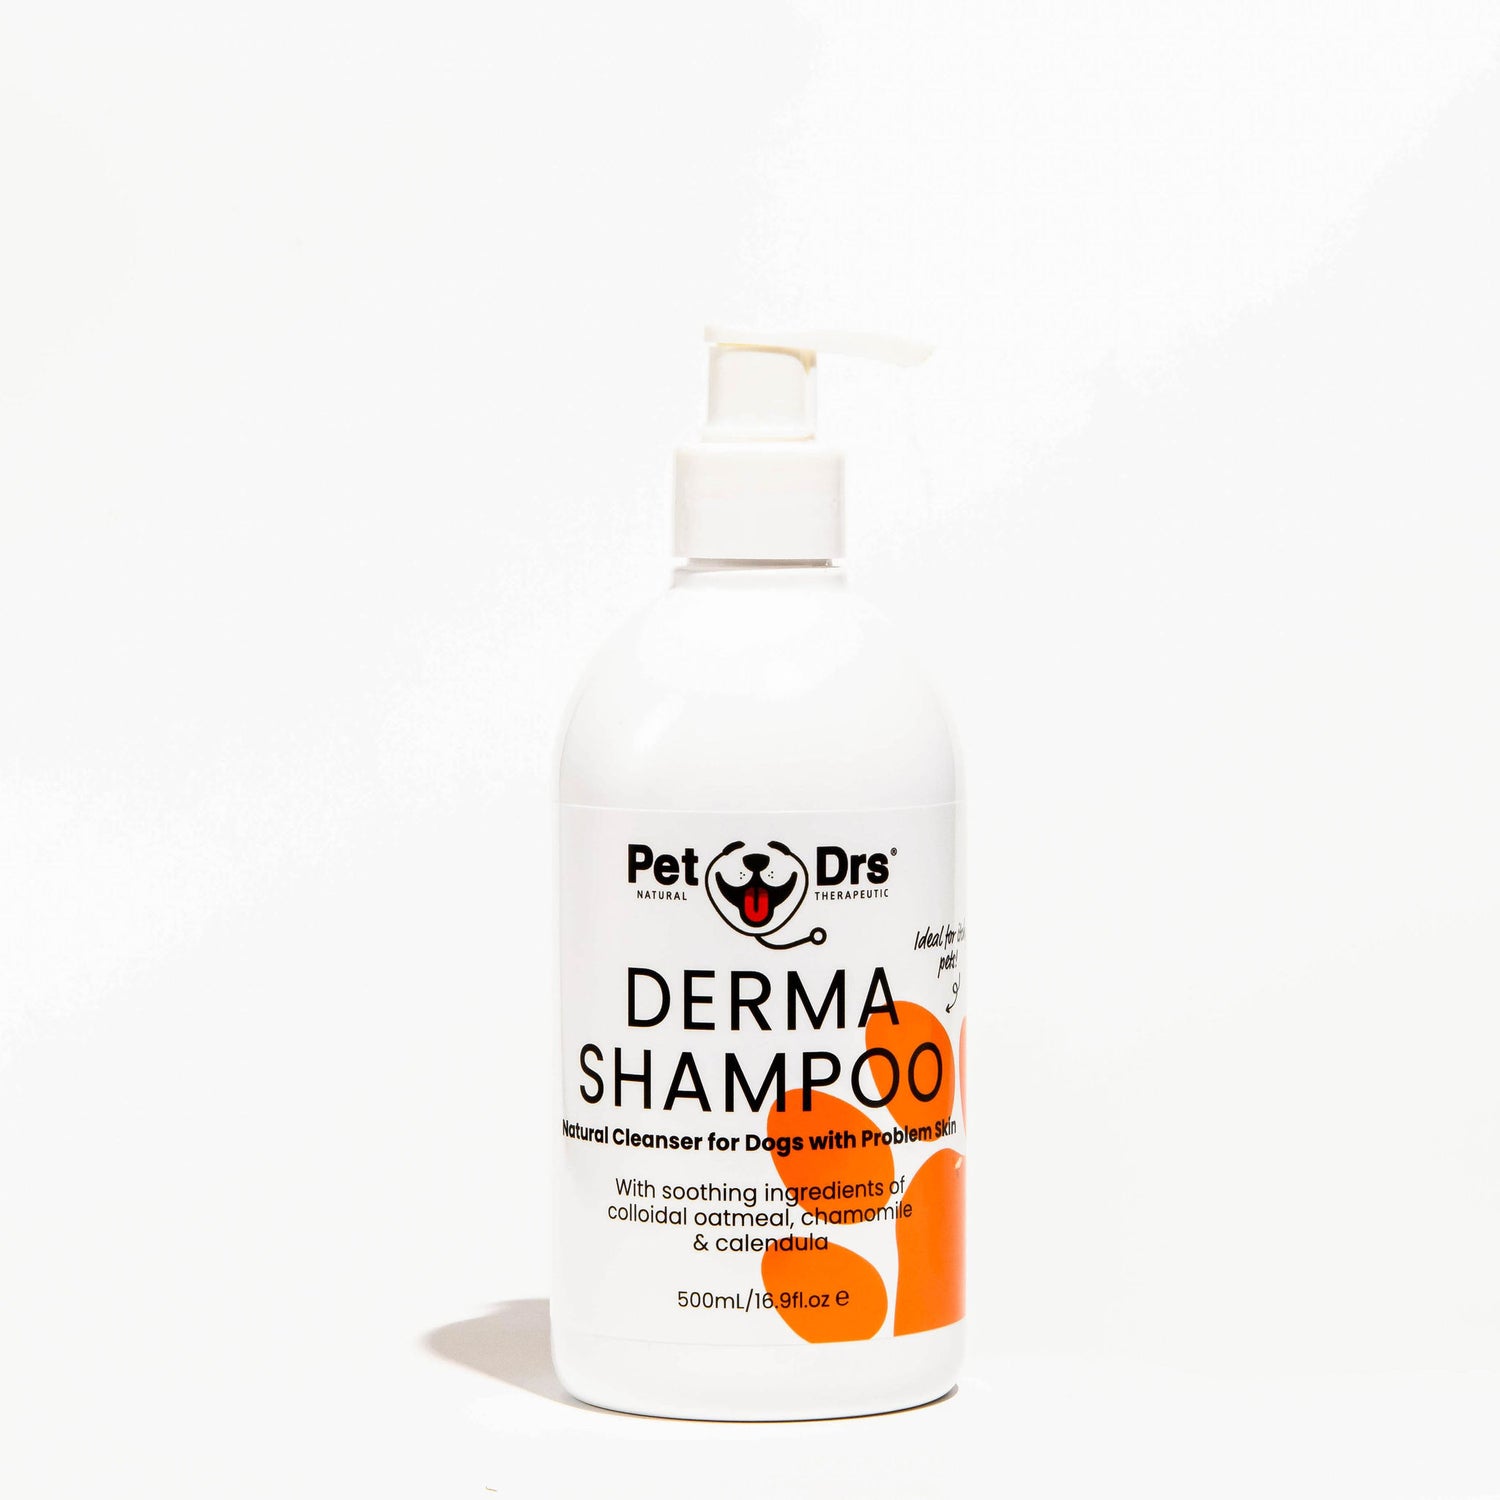 Derma Shampoo